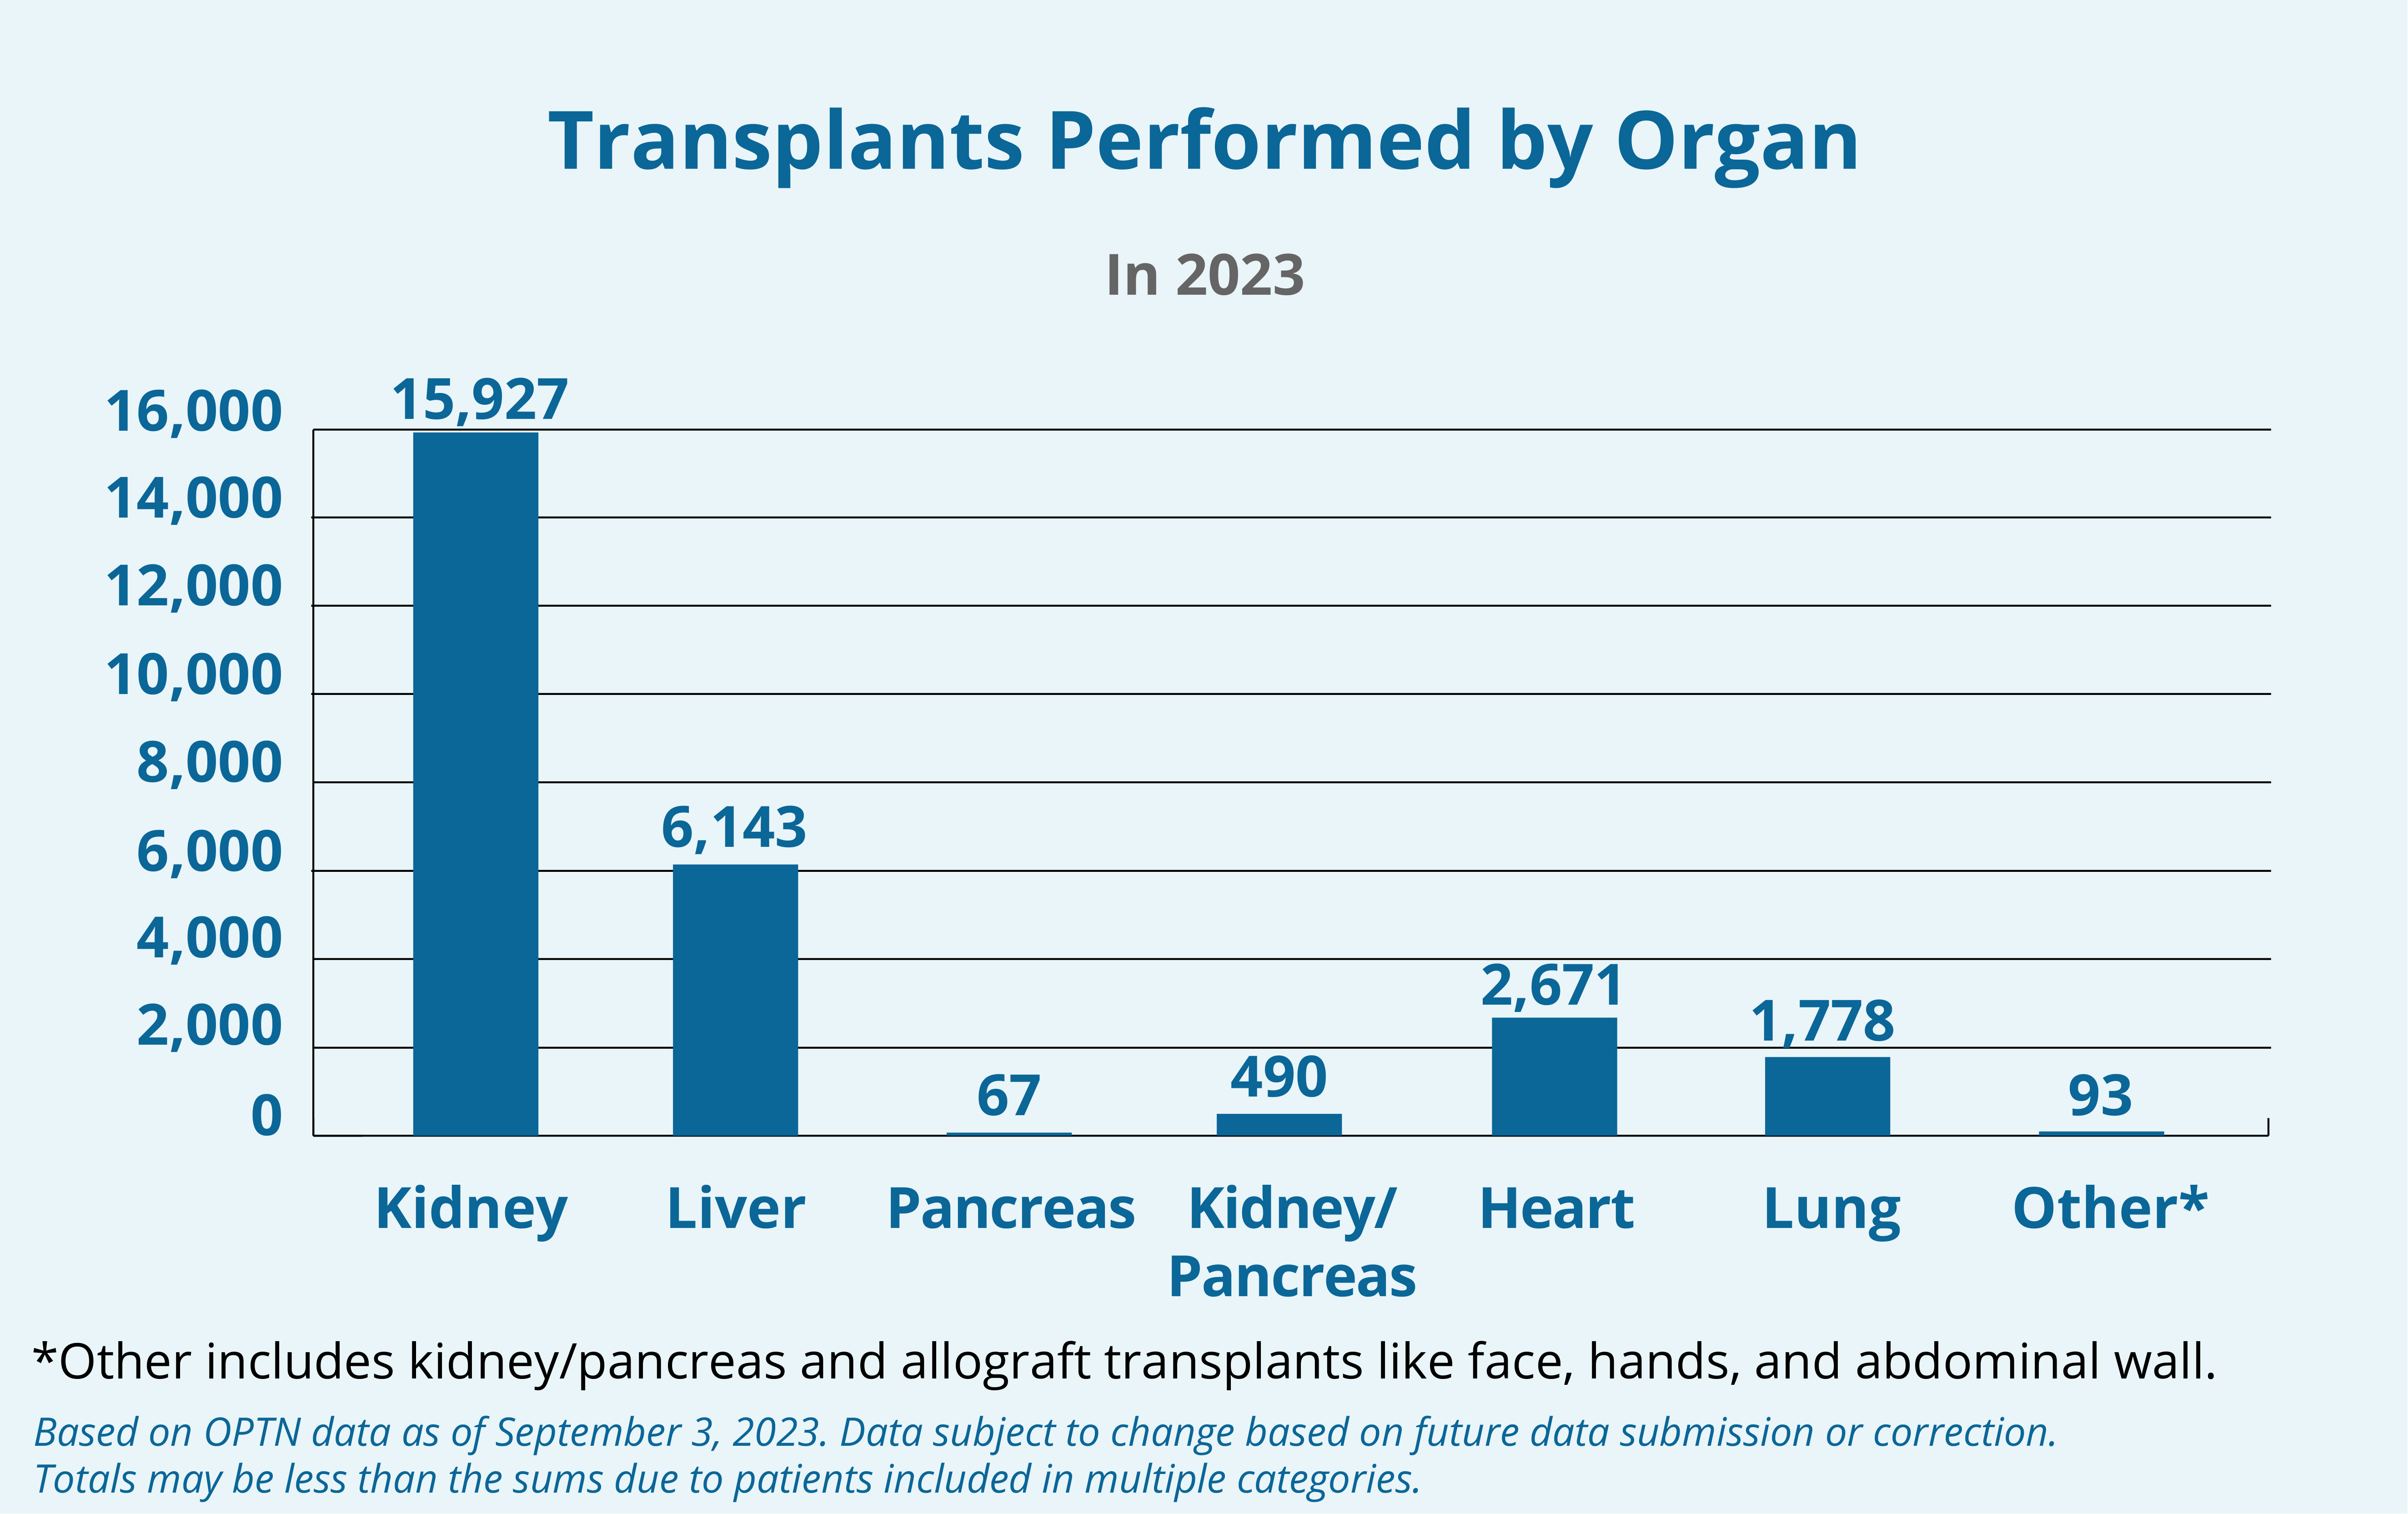 https://www.organdonor.gov/learn/organ-donation-statistics/detailed-description